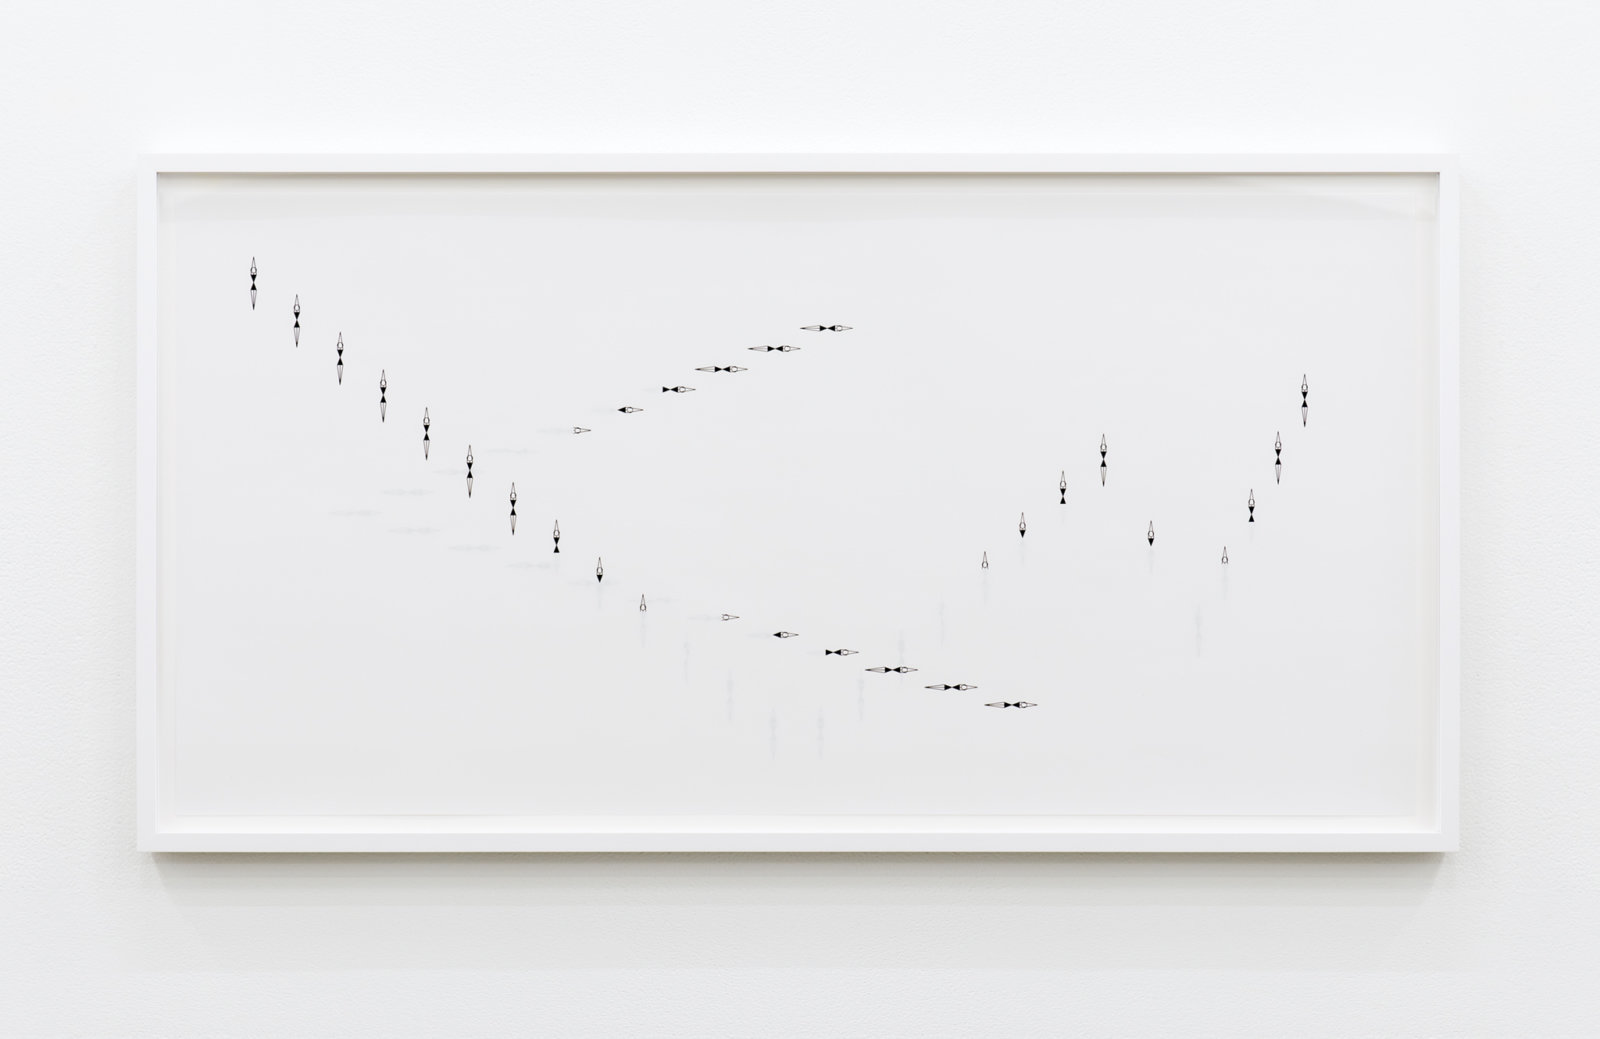 Janice Kerbel, Sync (Cannon), 2017, double sided silkscreen print on paper, 33 x 17 in. (84 x 42 cm)